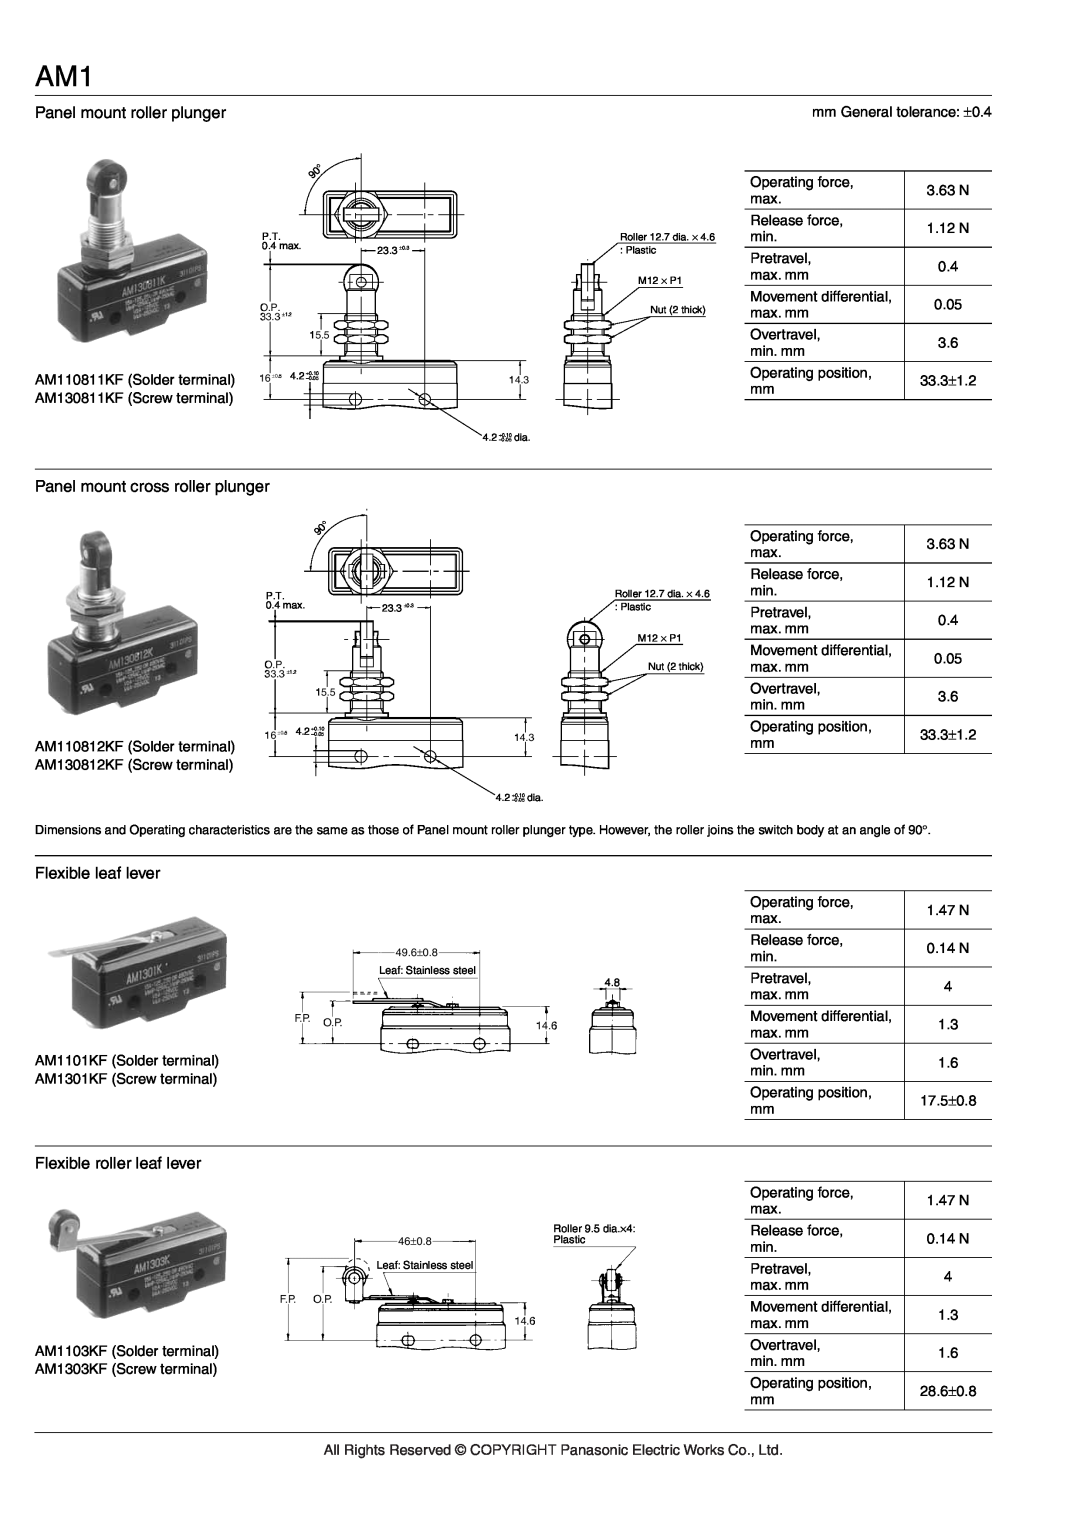 Panasonic AM1 (NZ BASIC) specifications Panel mount roller plunger, Panel mount cross roller plunger, Flexible leaf lever 